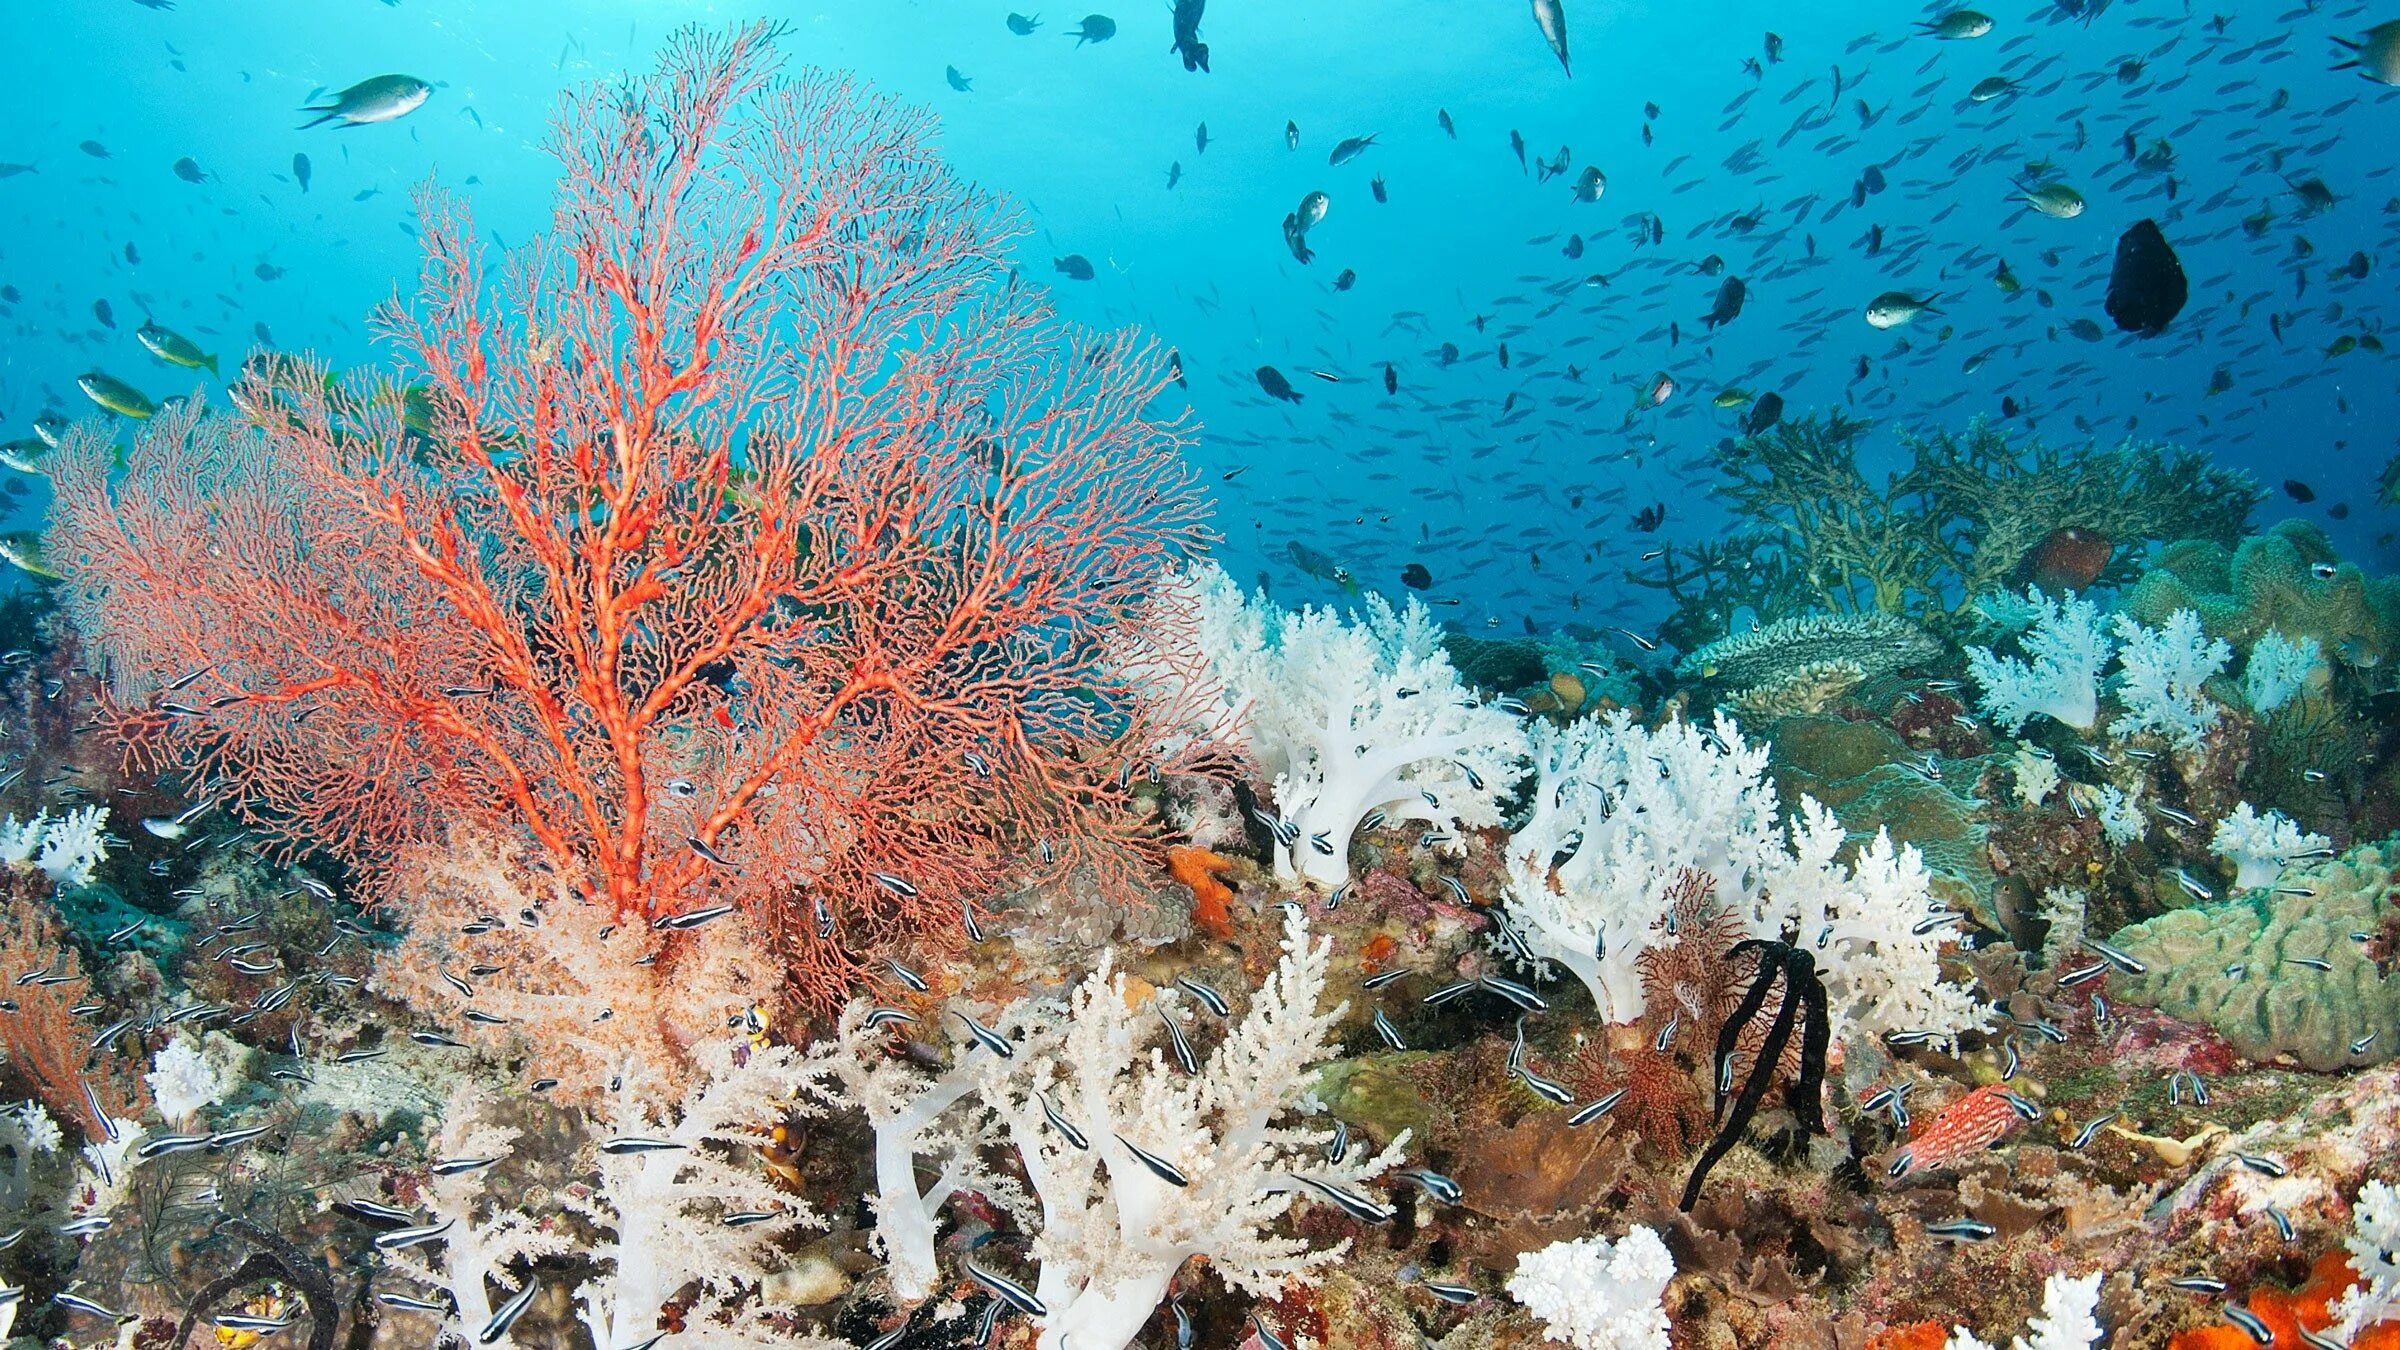 The coral has. Атлантический океан коралловый риф. Ярусность кораллового рифа. Морские водоросли на рифе. Коралл циатофиллум.